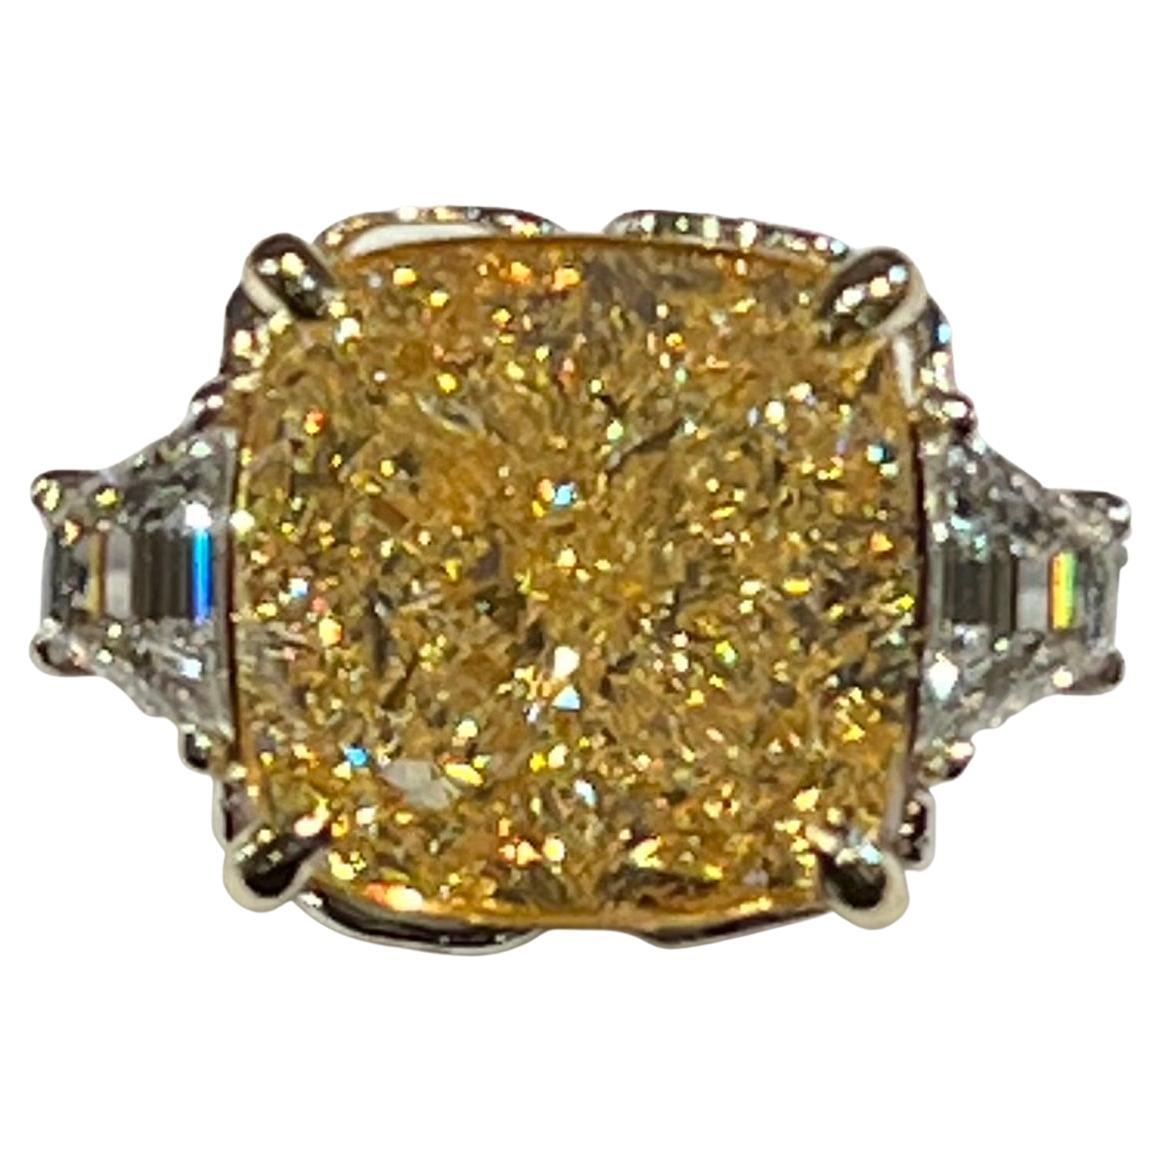 Rare 8.88 Carat GIA Certified Internally Flawless Fancy Yellow Diamond Ring 